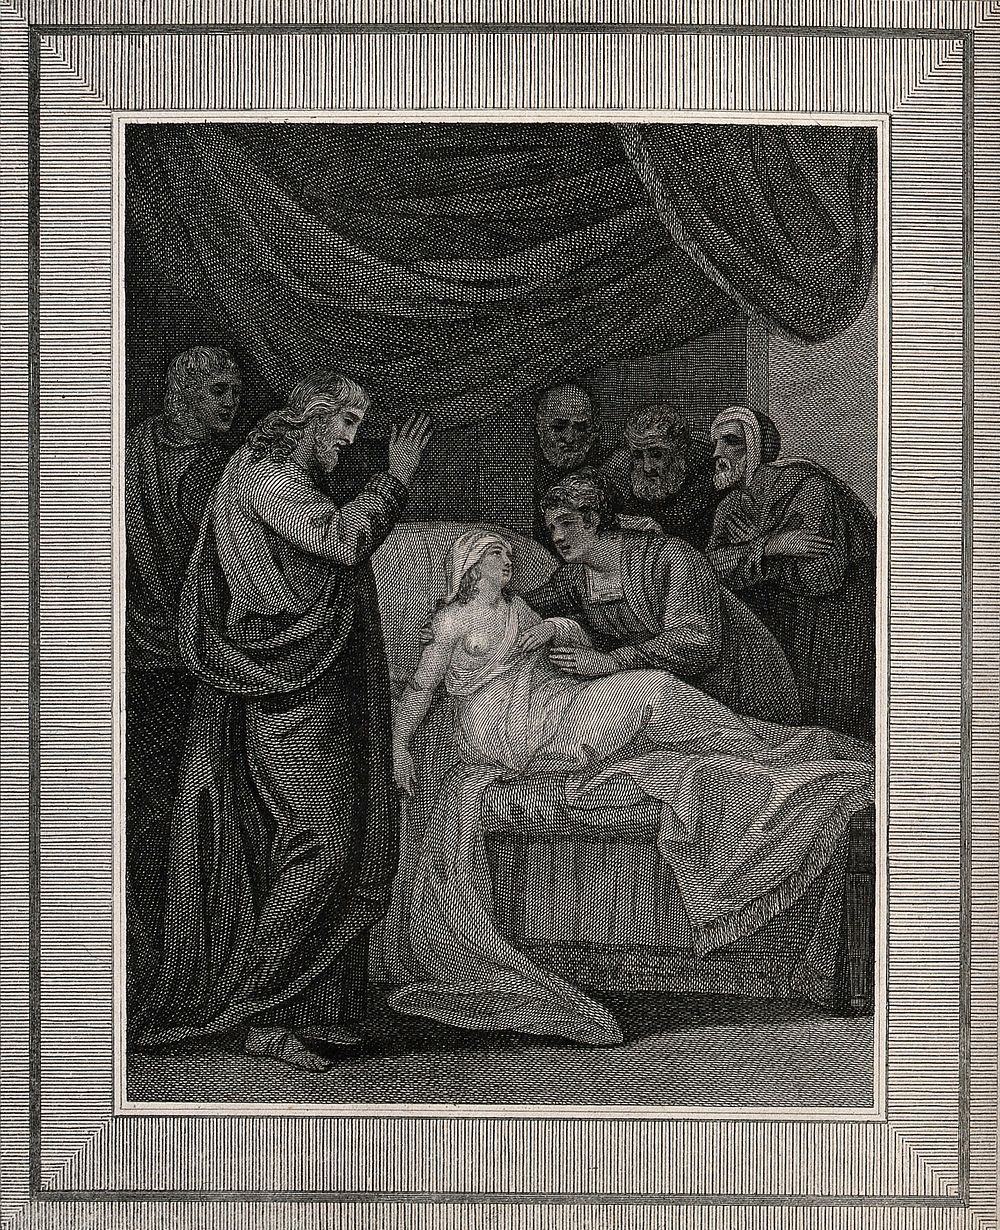 Christ raises Jairus' daughter. Engraving.